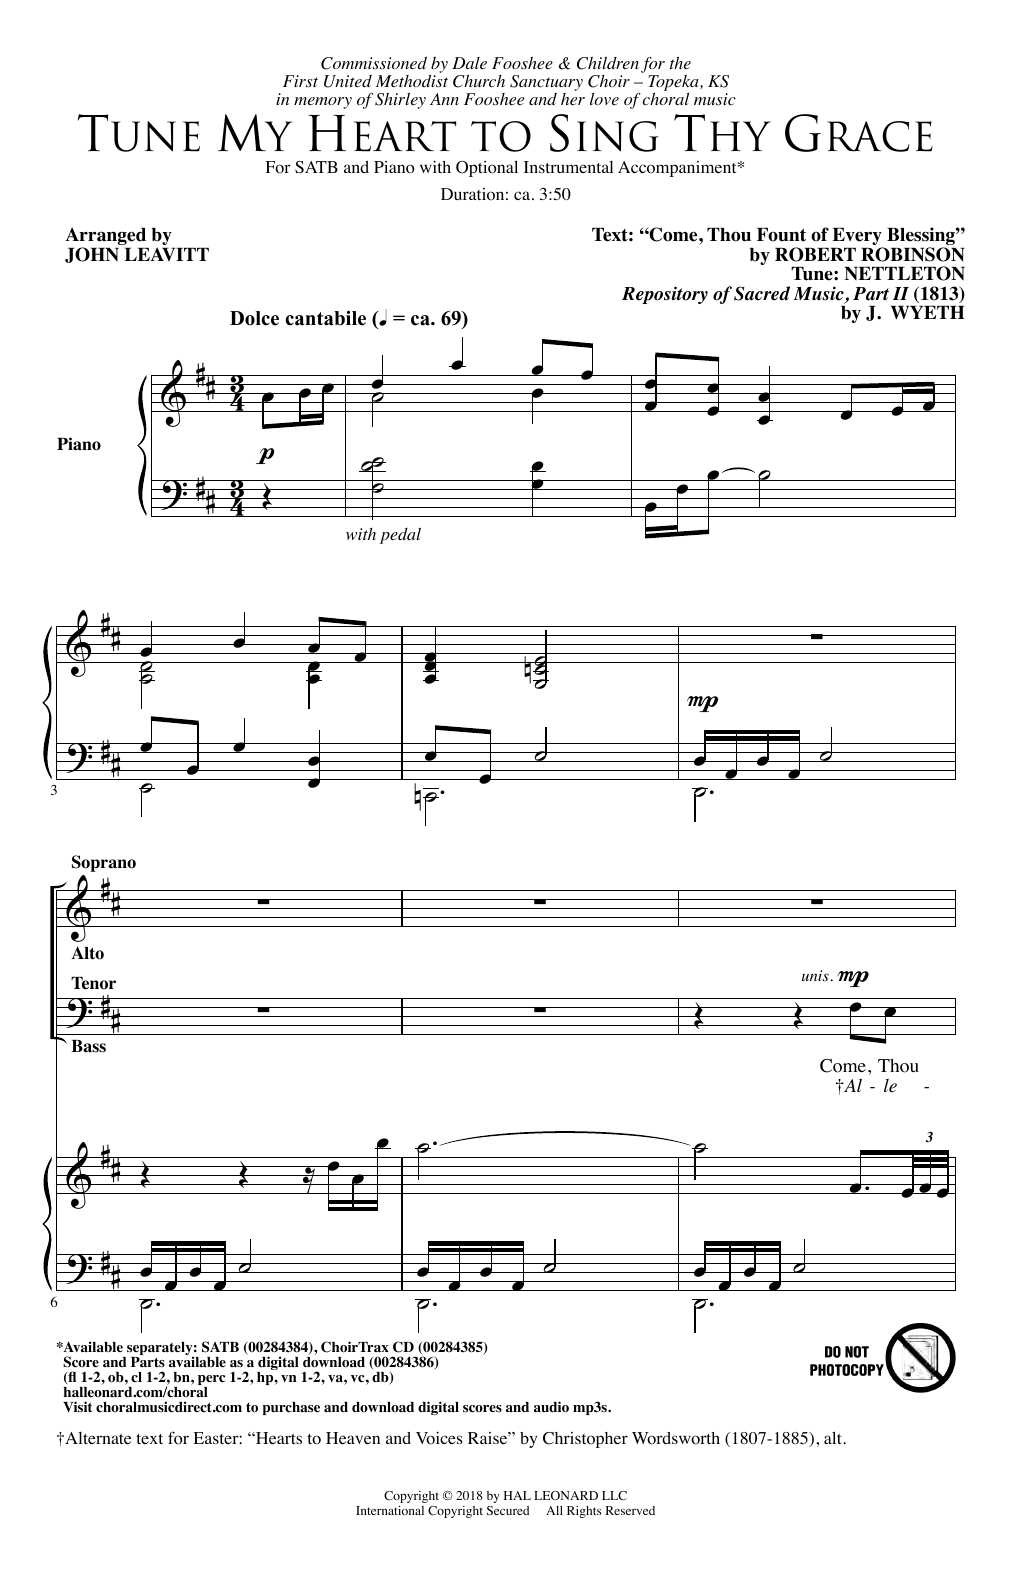 Robert Robinson Tune My Heart To Sing Thy Grace (arr. John Leavitt) Sheet Music Notes & Chords for SATB Choir - Download or Print PDF